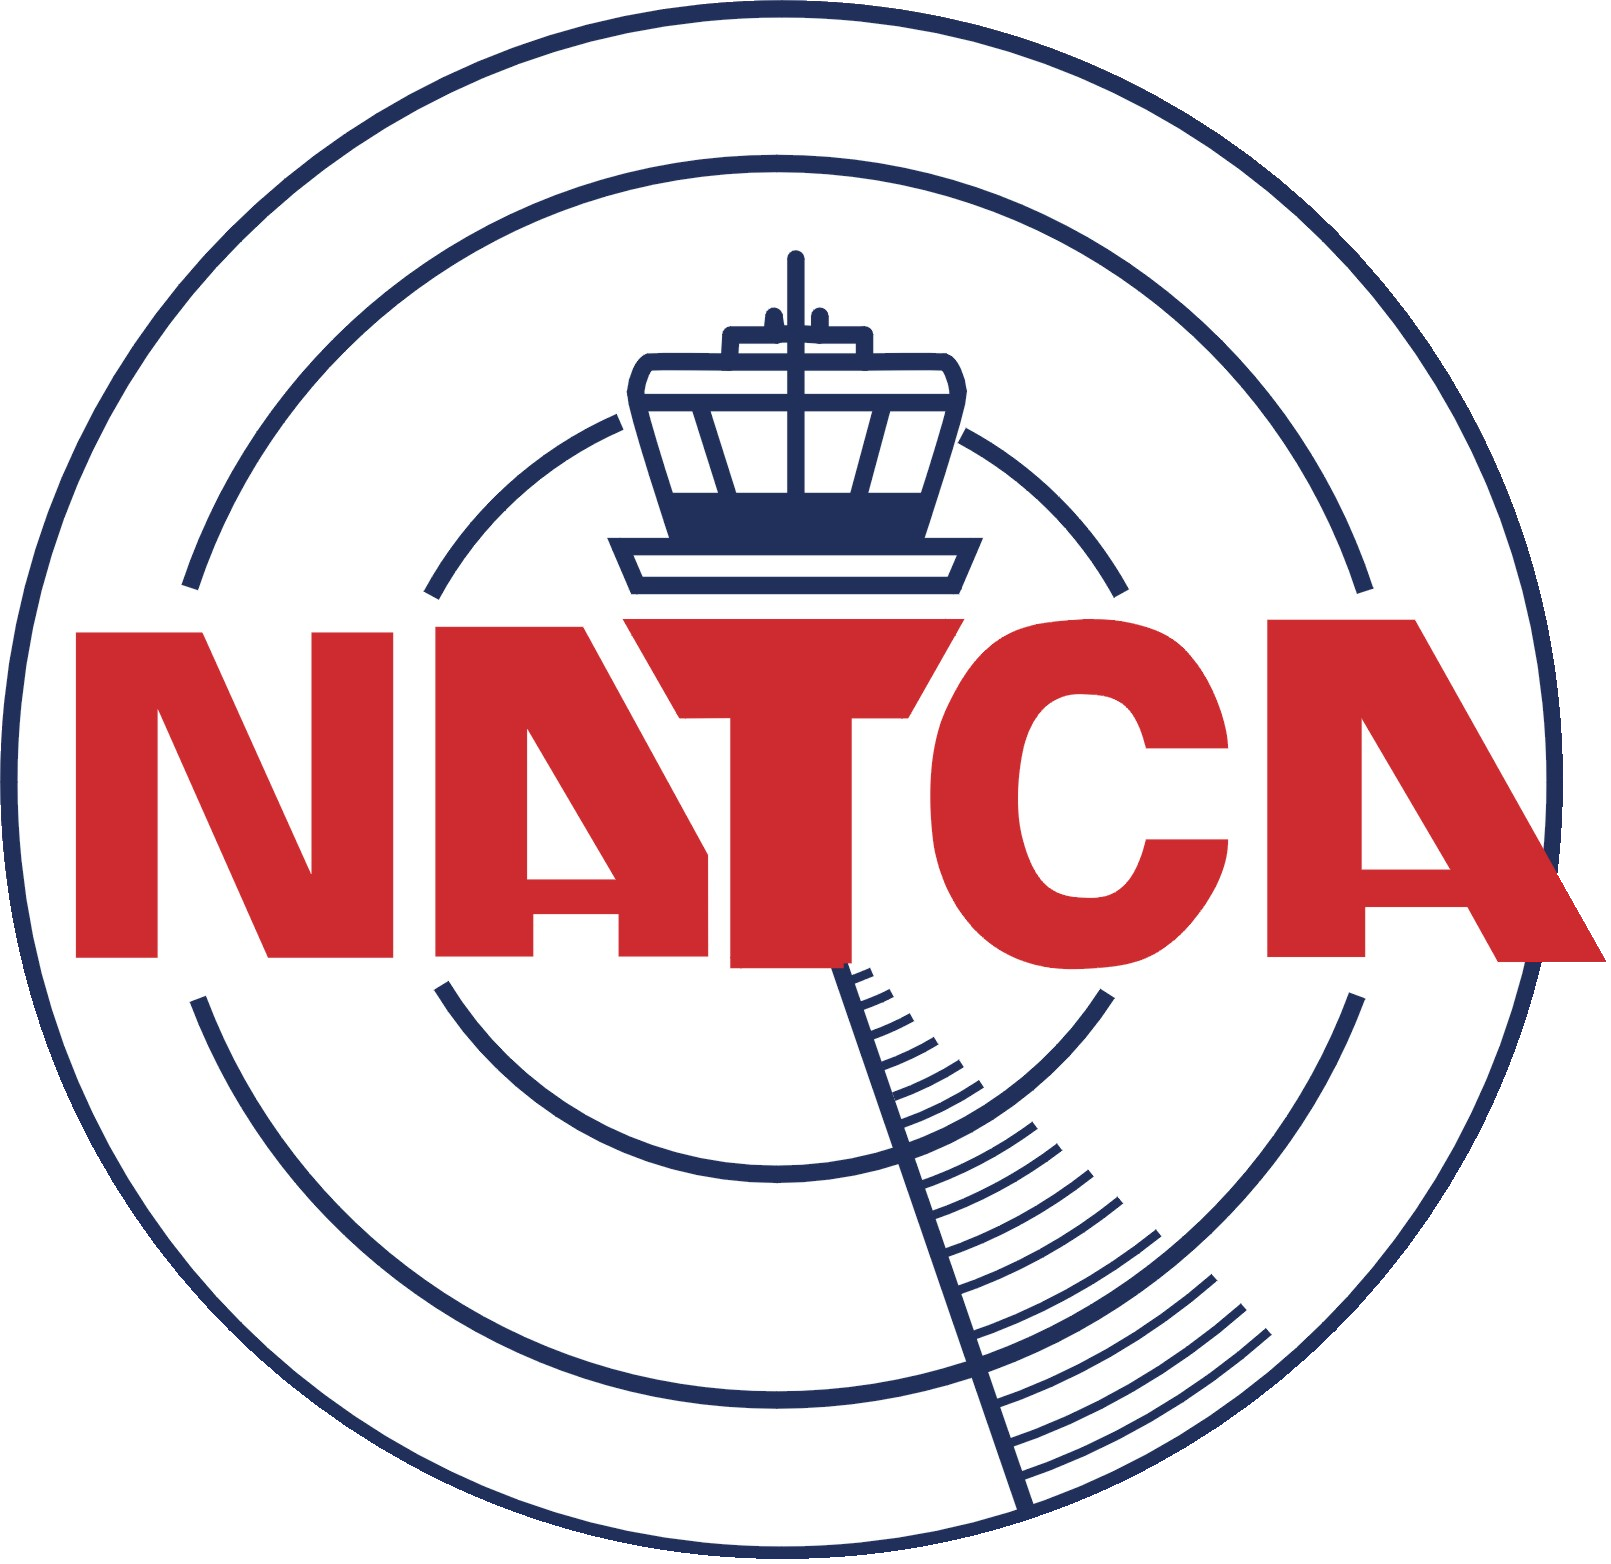 NATCA Logo detail image